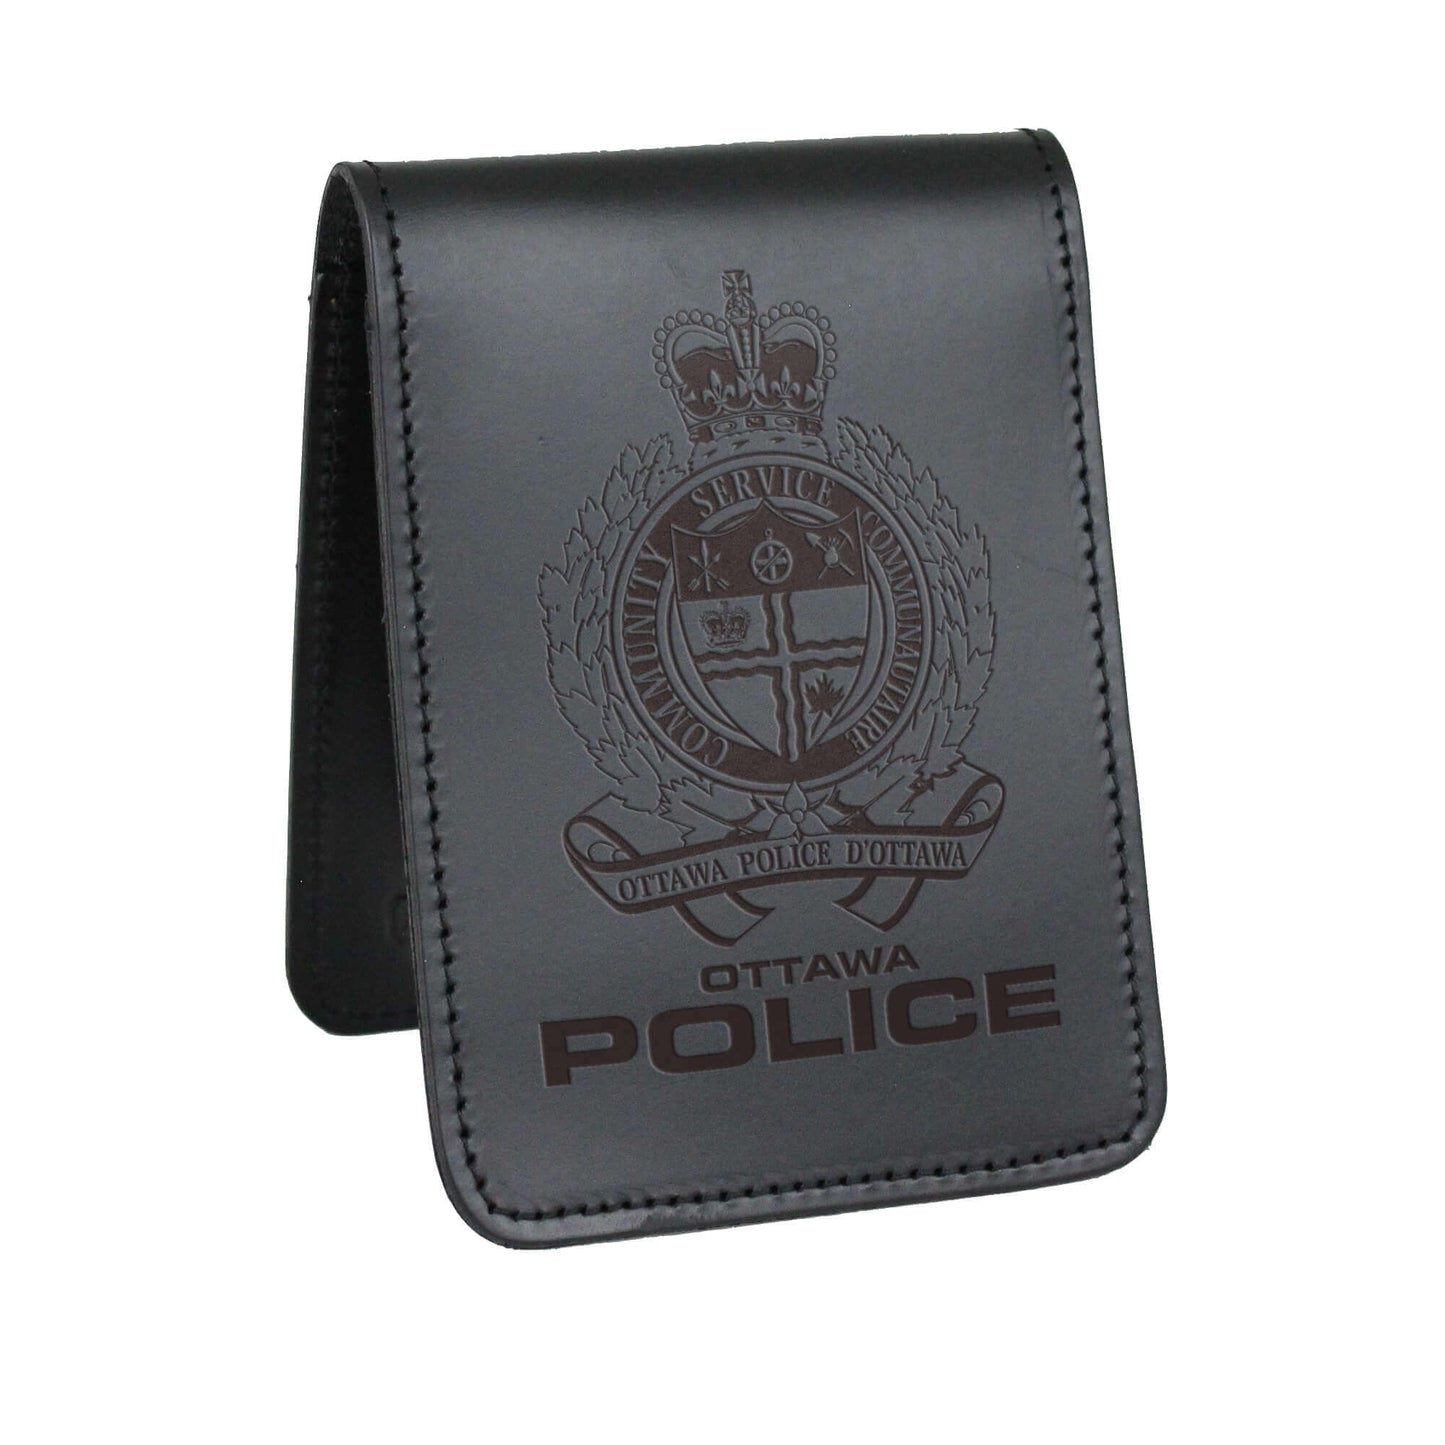 Ottawa Police Service Notebook Cover